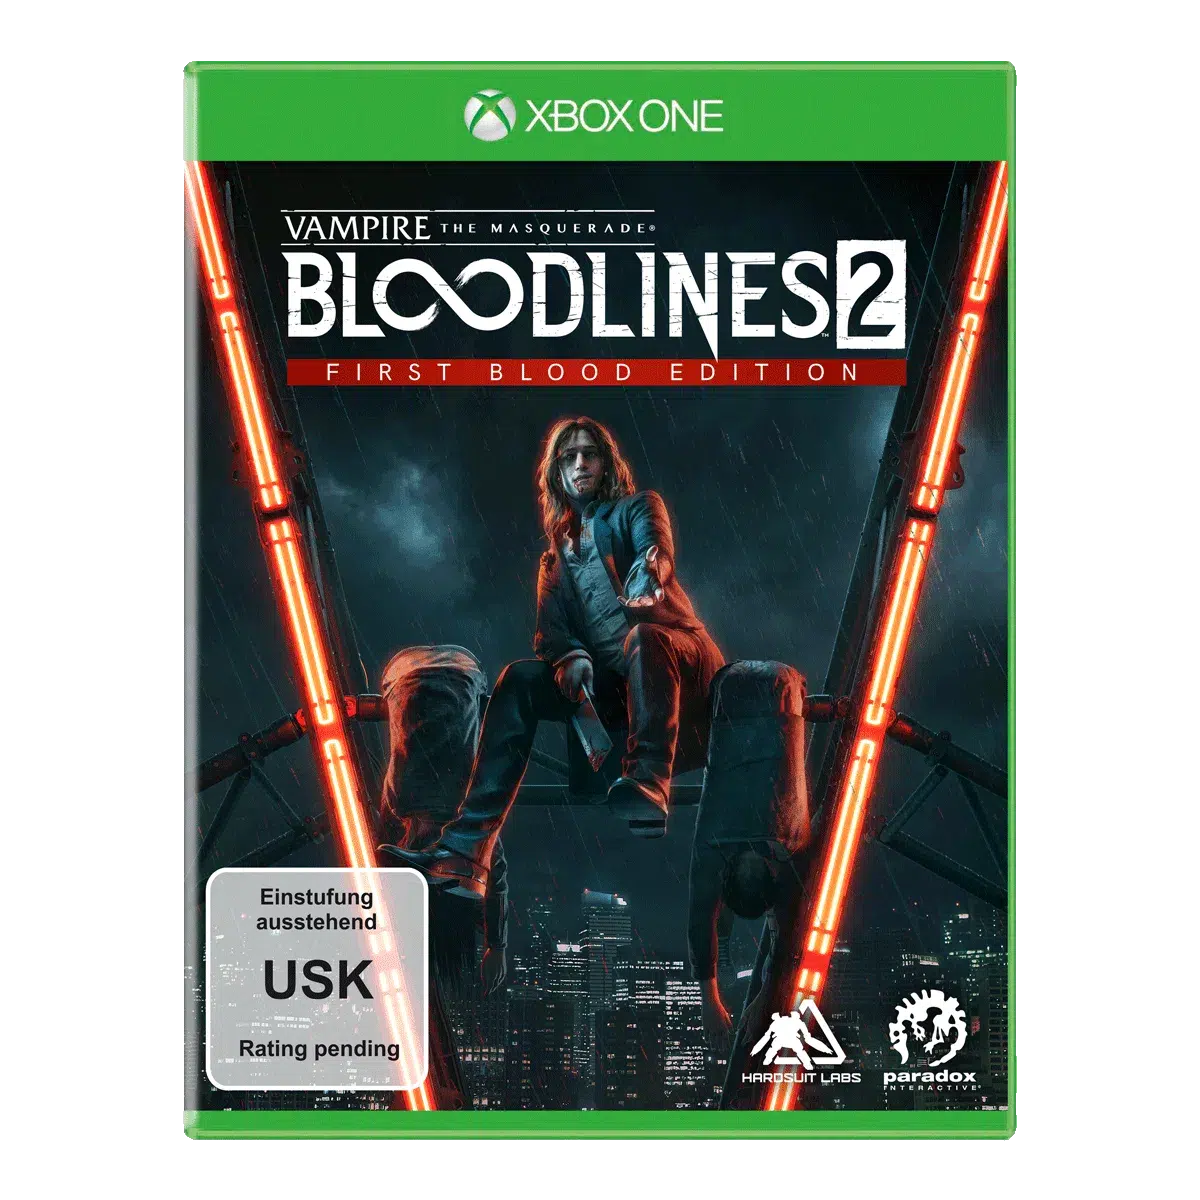 Vampire: The Masquerade Bloodlines 2 First Blood Edition - XONE